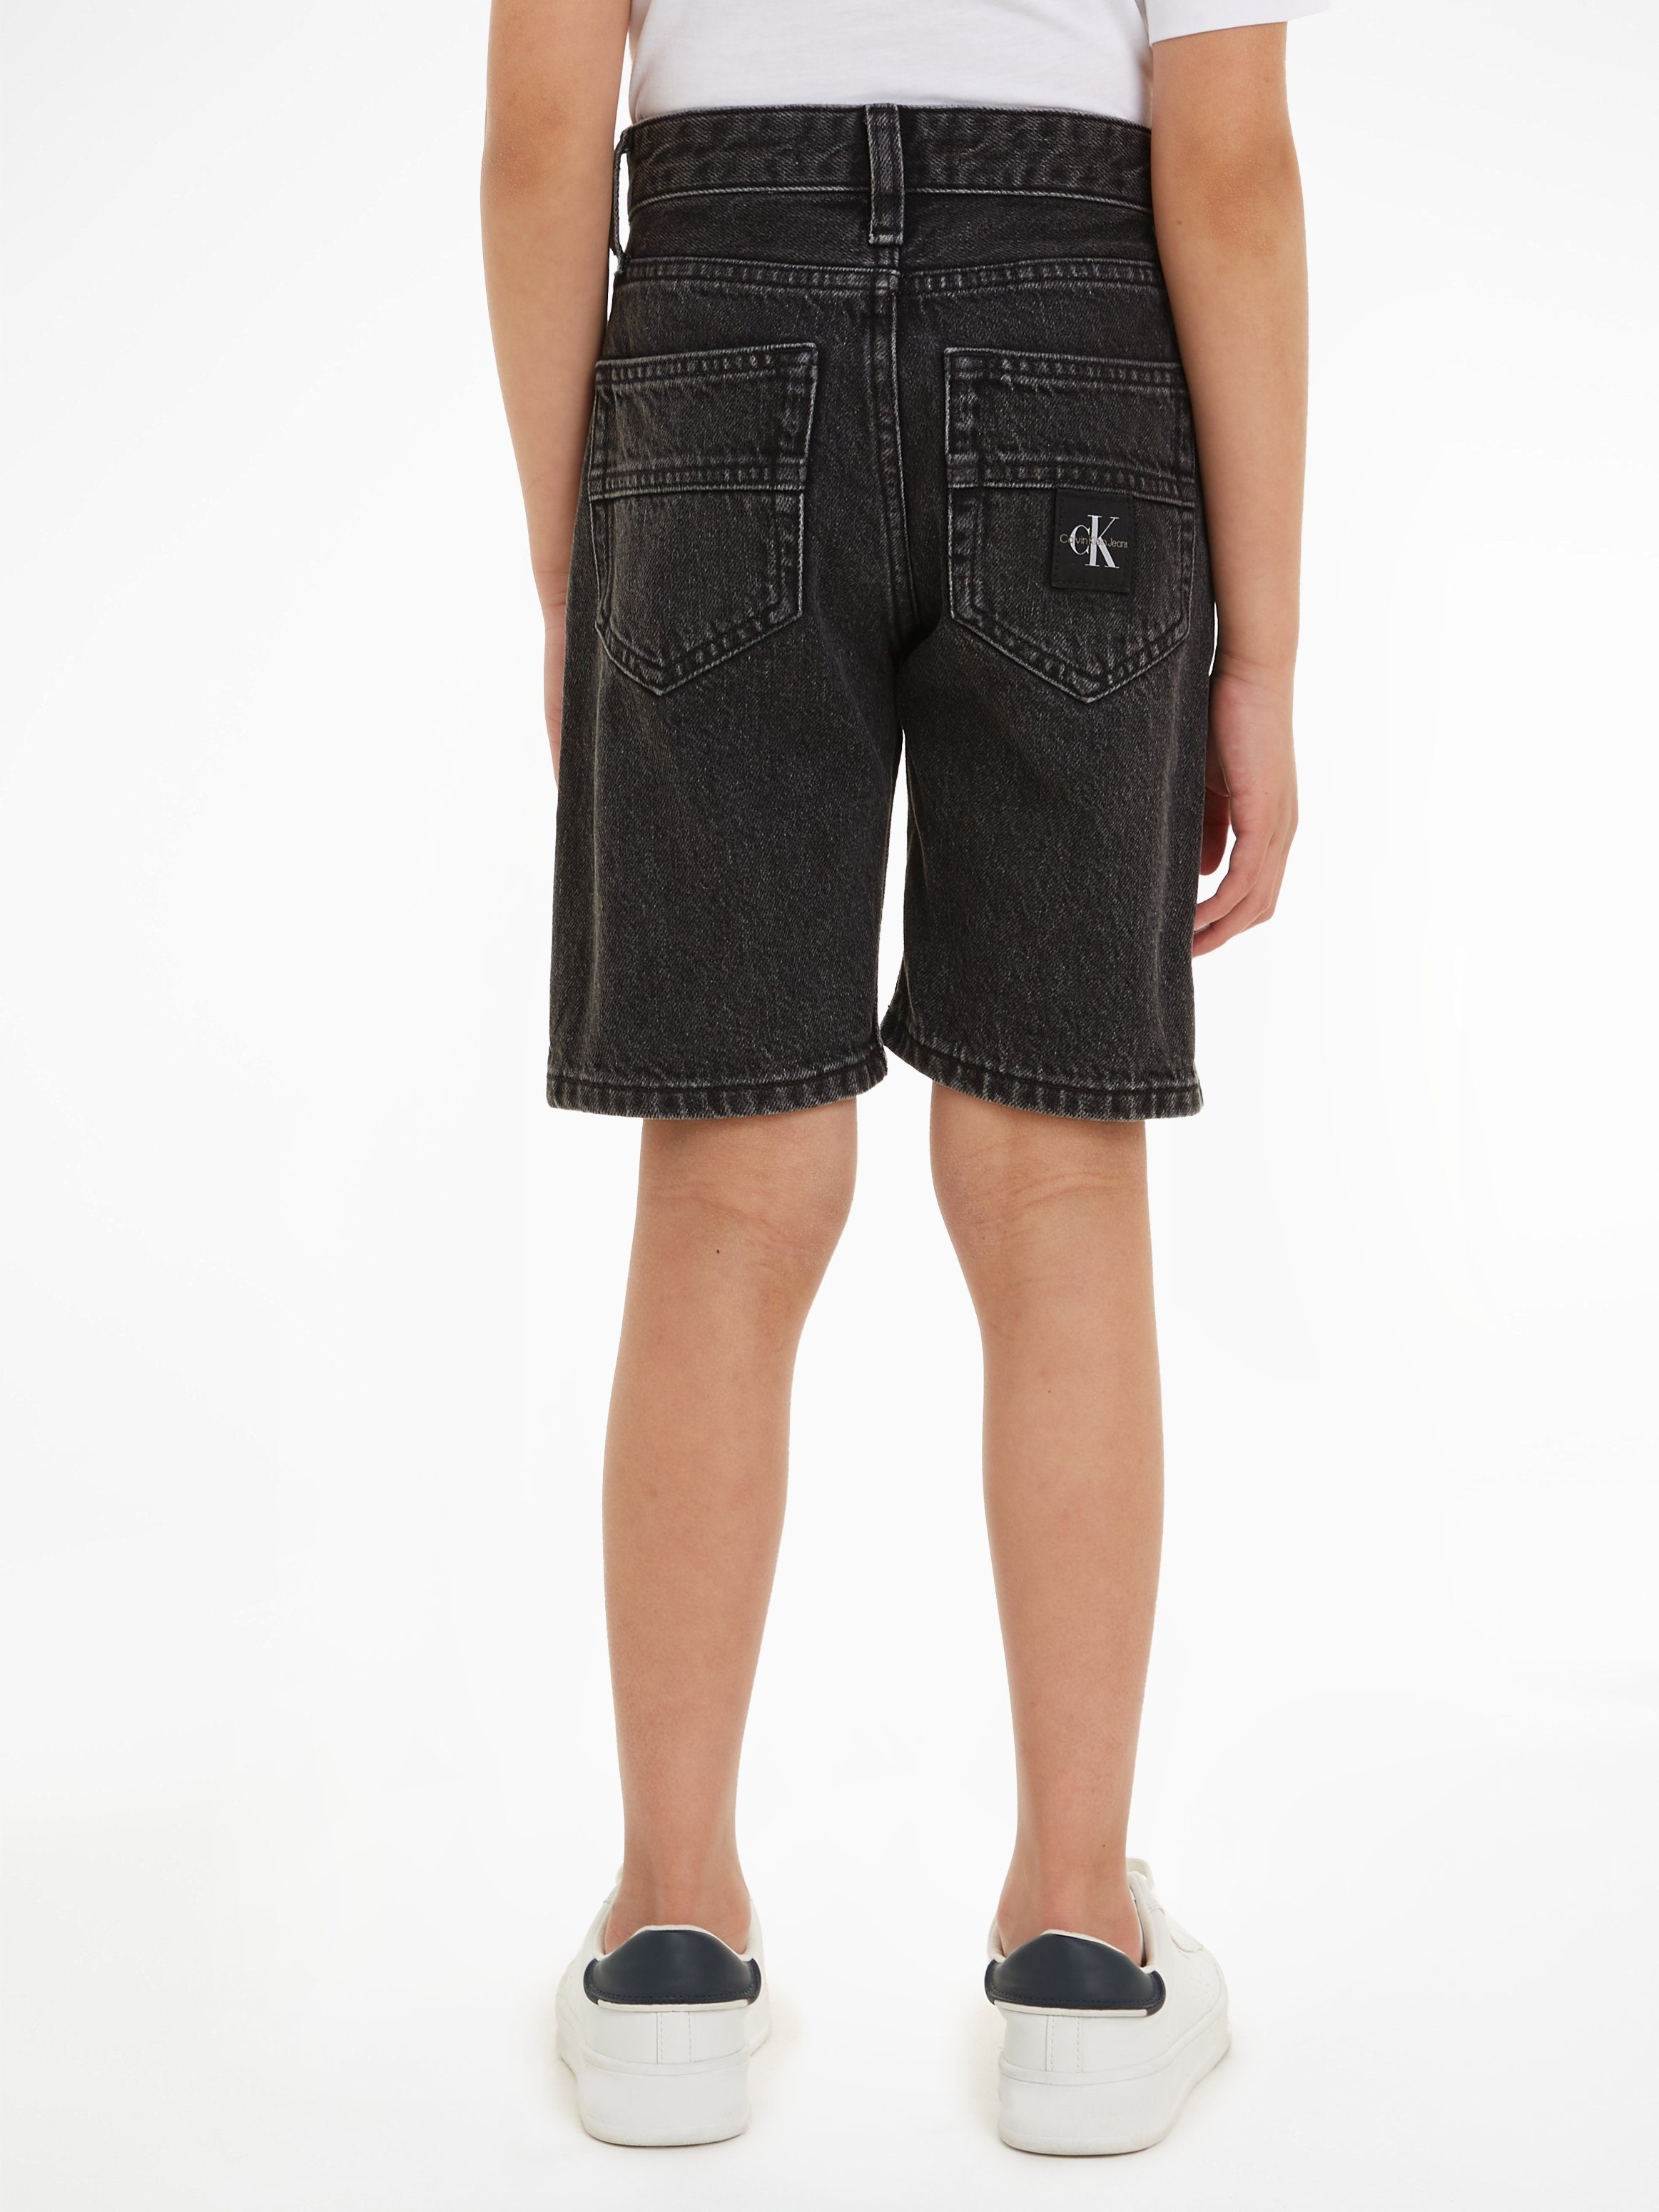 Calvin Klein Jeans SHORTS RELAXED DENIM Shorts 5-Poket-Style im